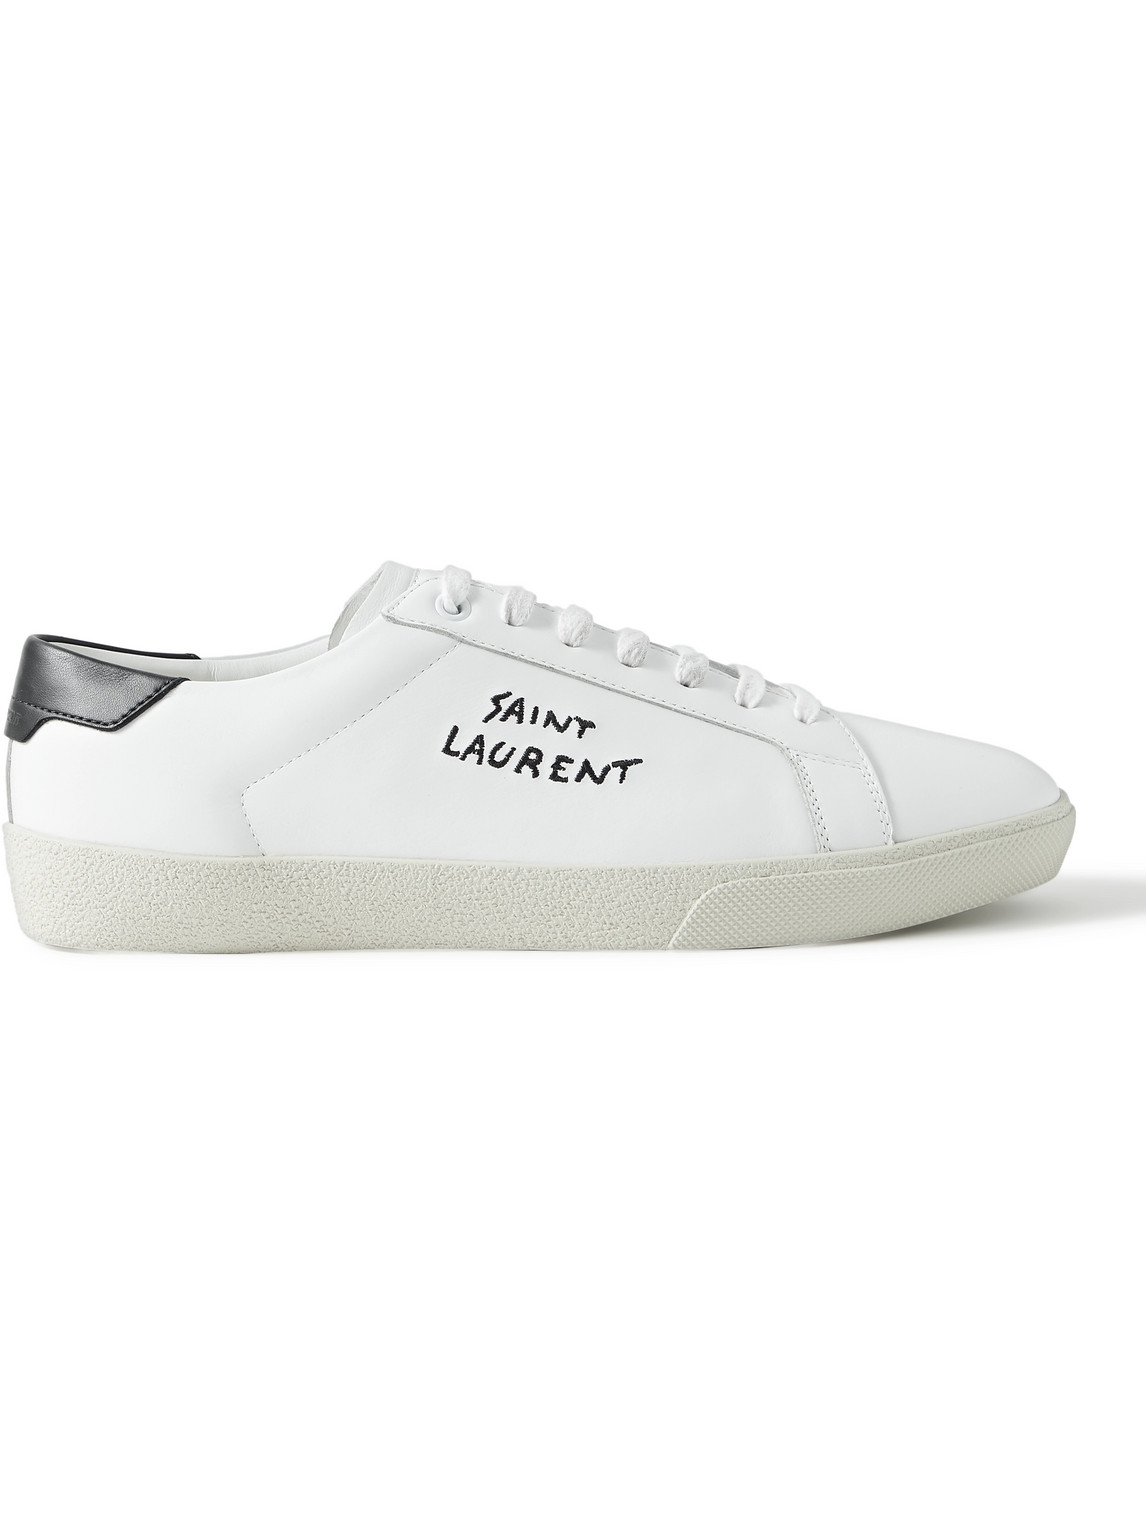 SAINT LAURENT - SL/06 Court Classic Logo-Embroidered Leather Sneakers - Men  - White - EU 39 for Men